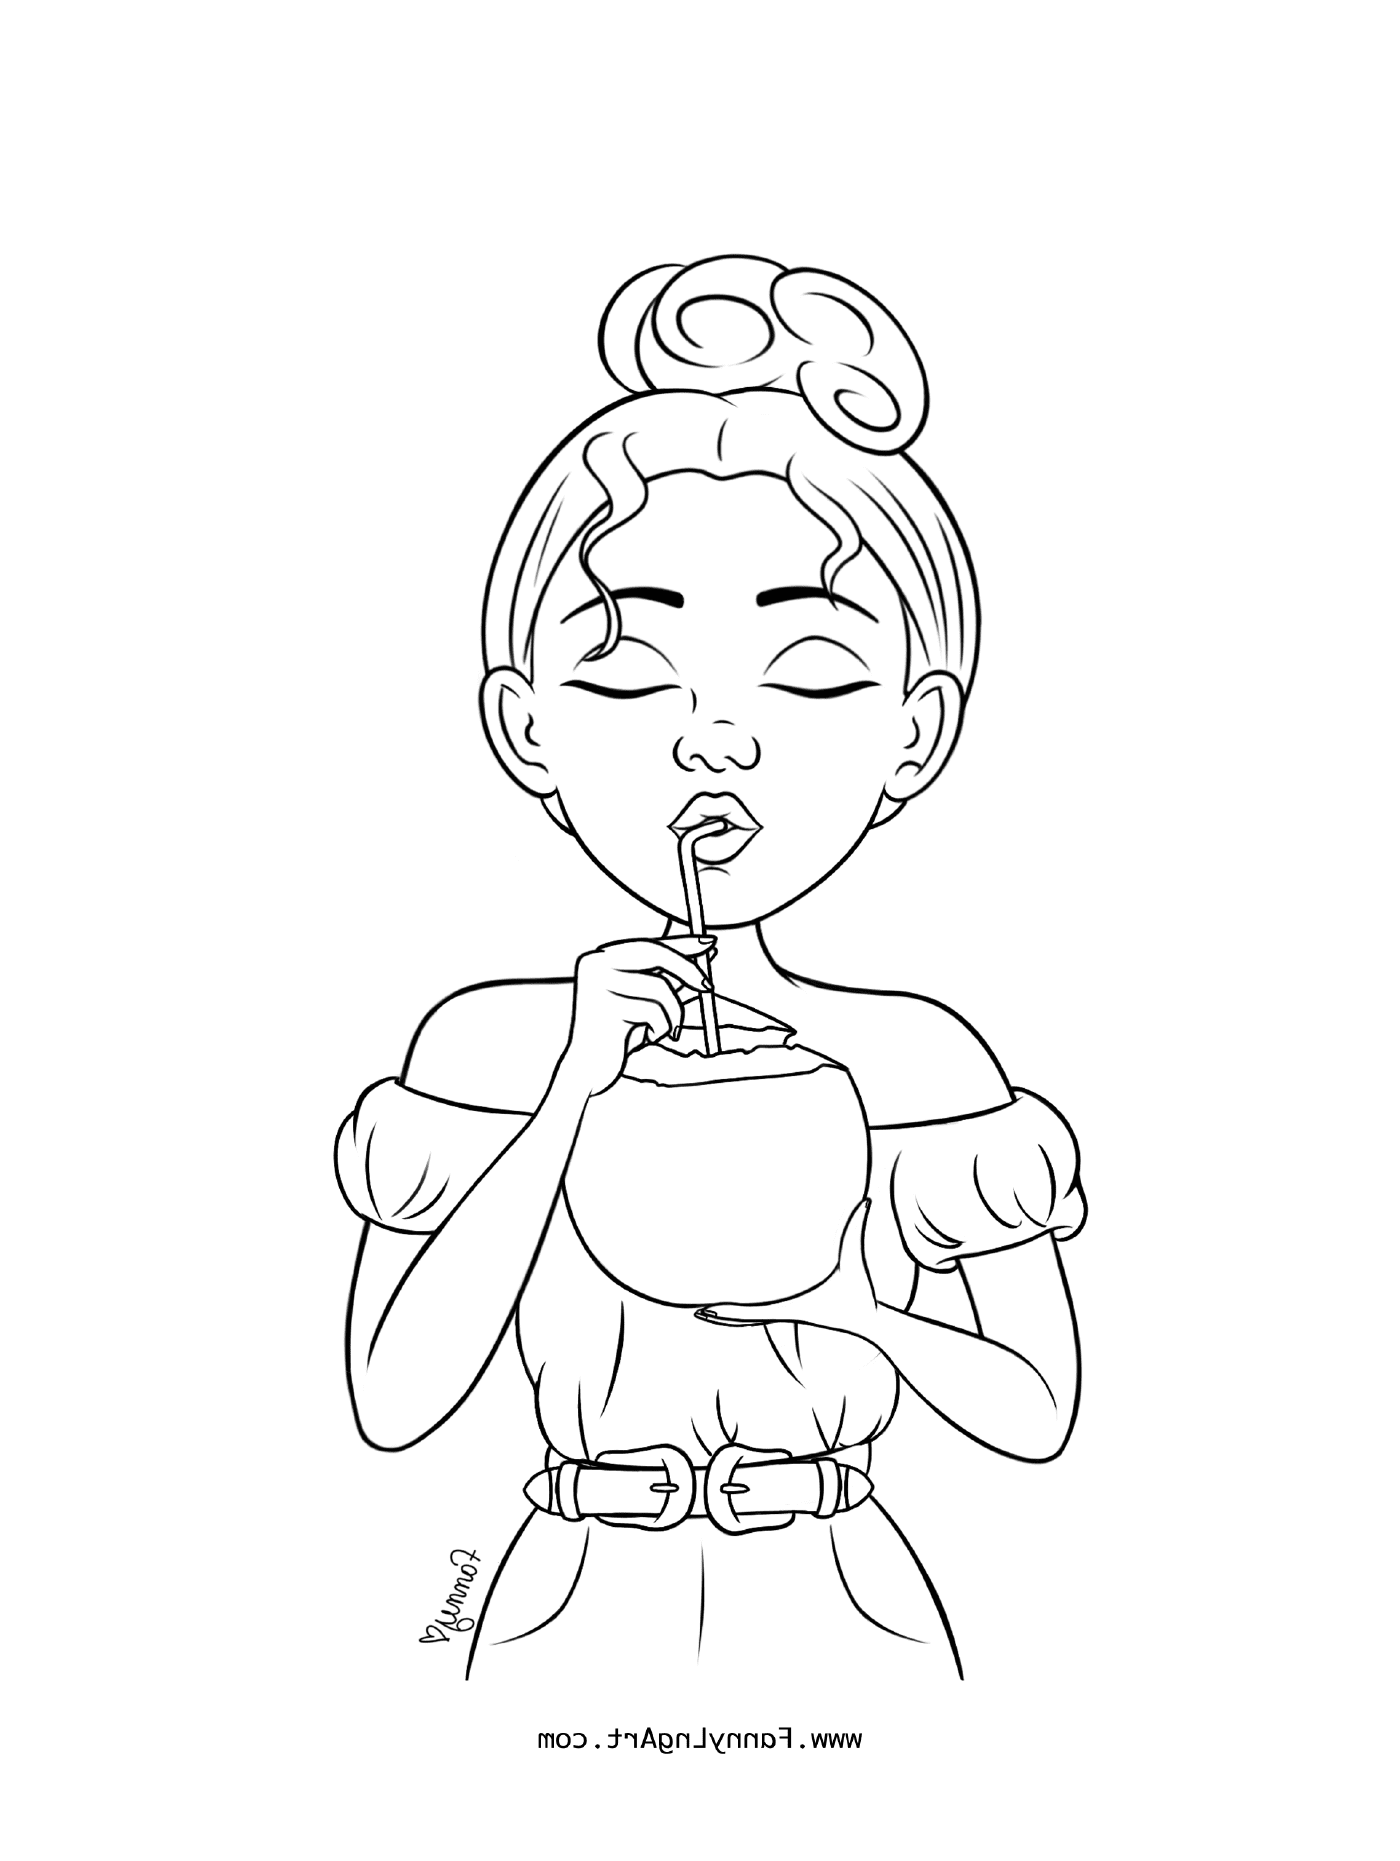  Menina jovem bebendo uma bebida de coco 